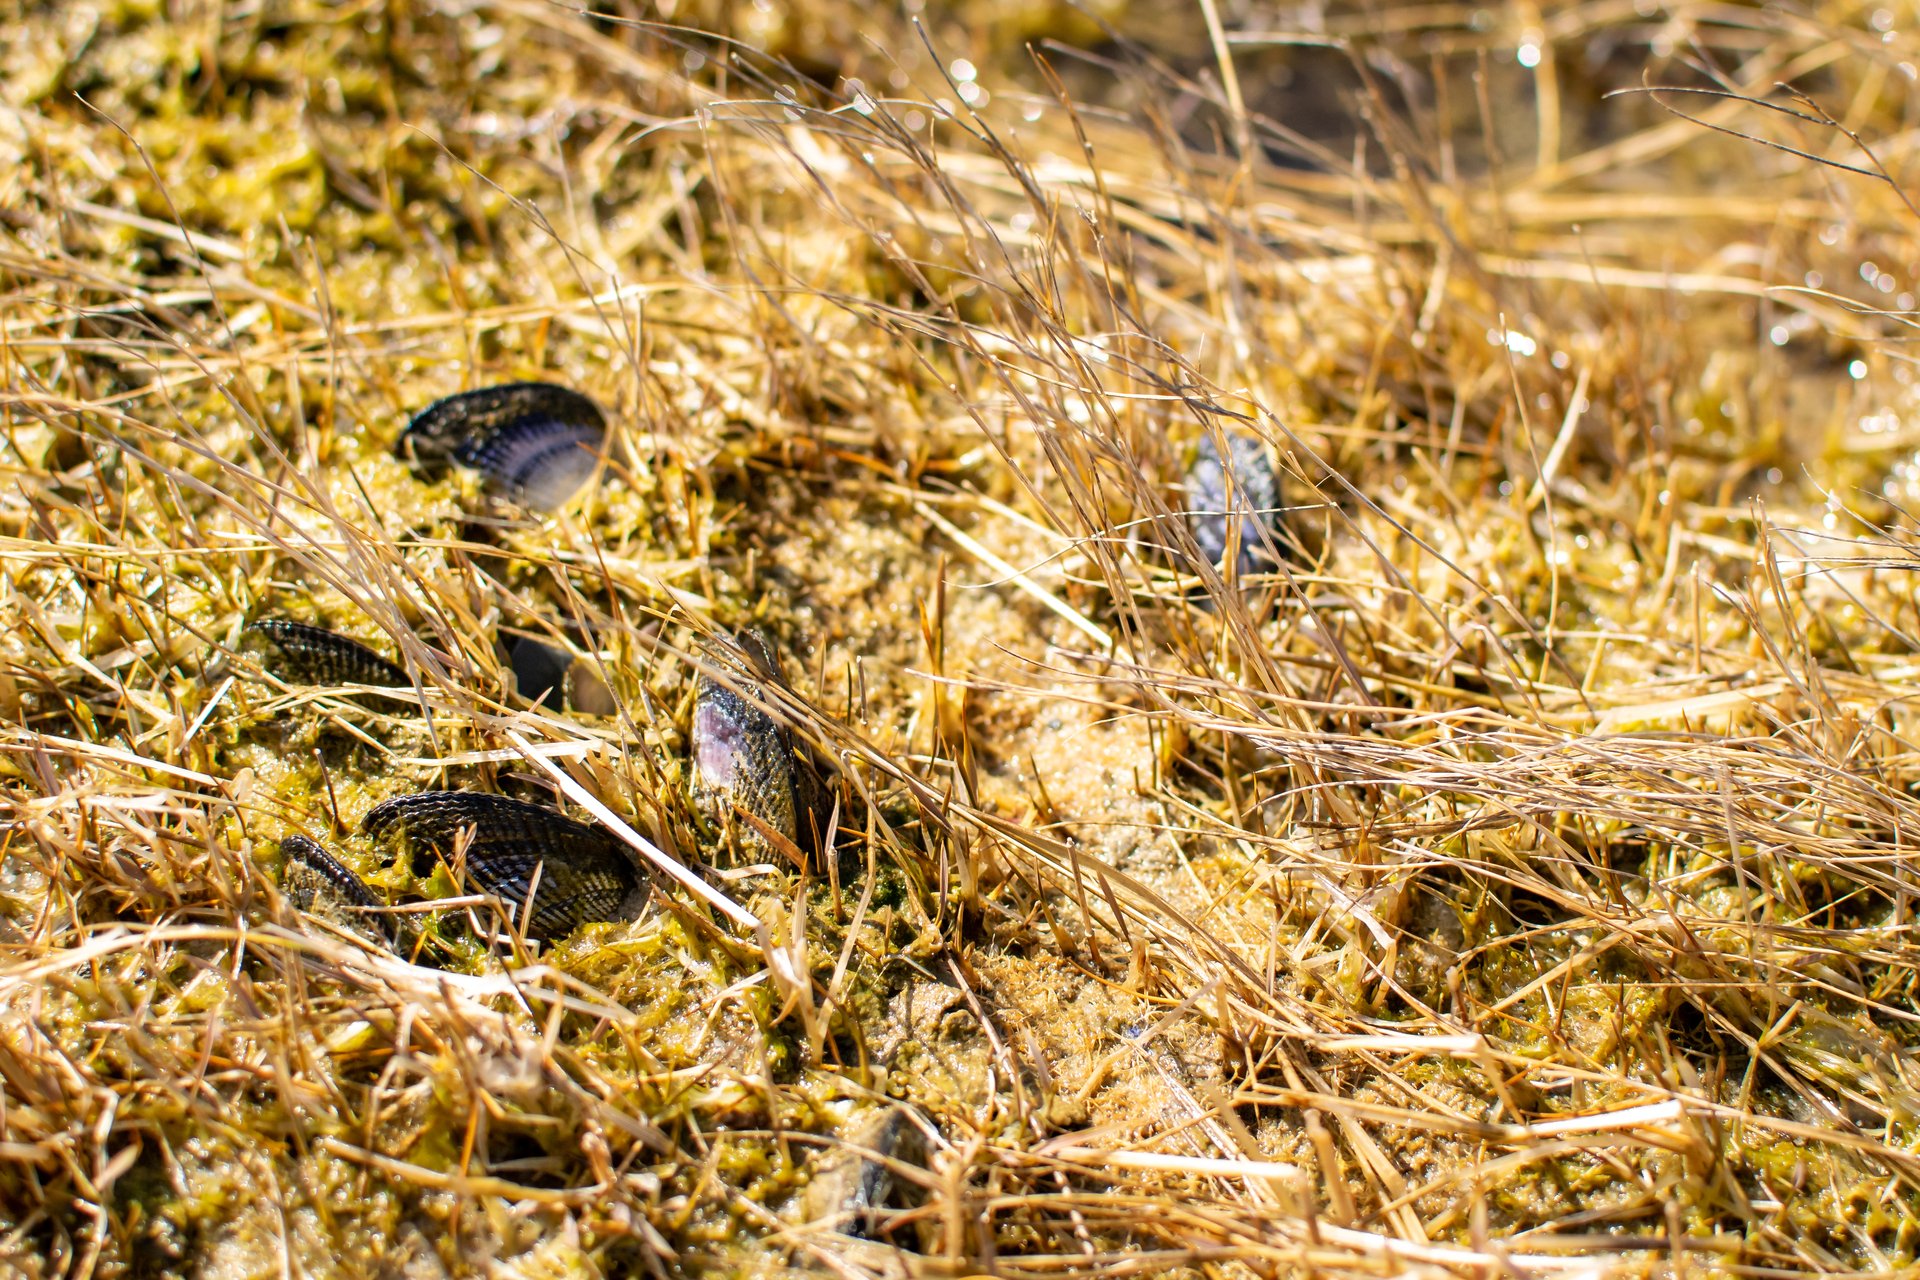 Black shells in marshy brown vegetation.